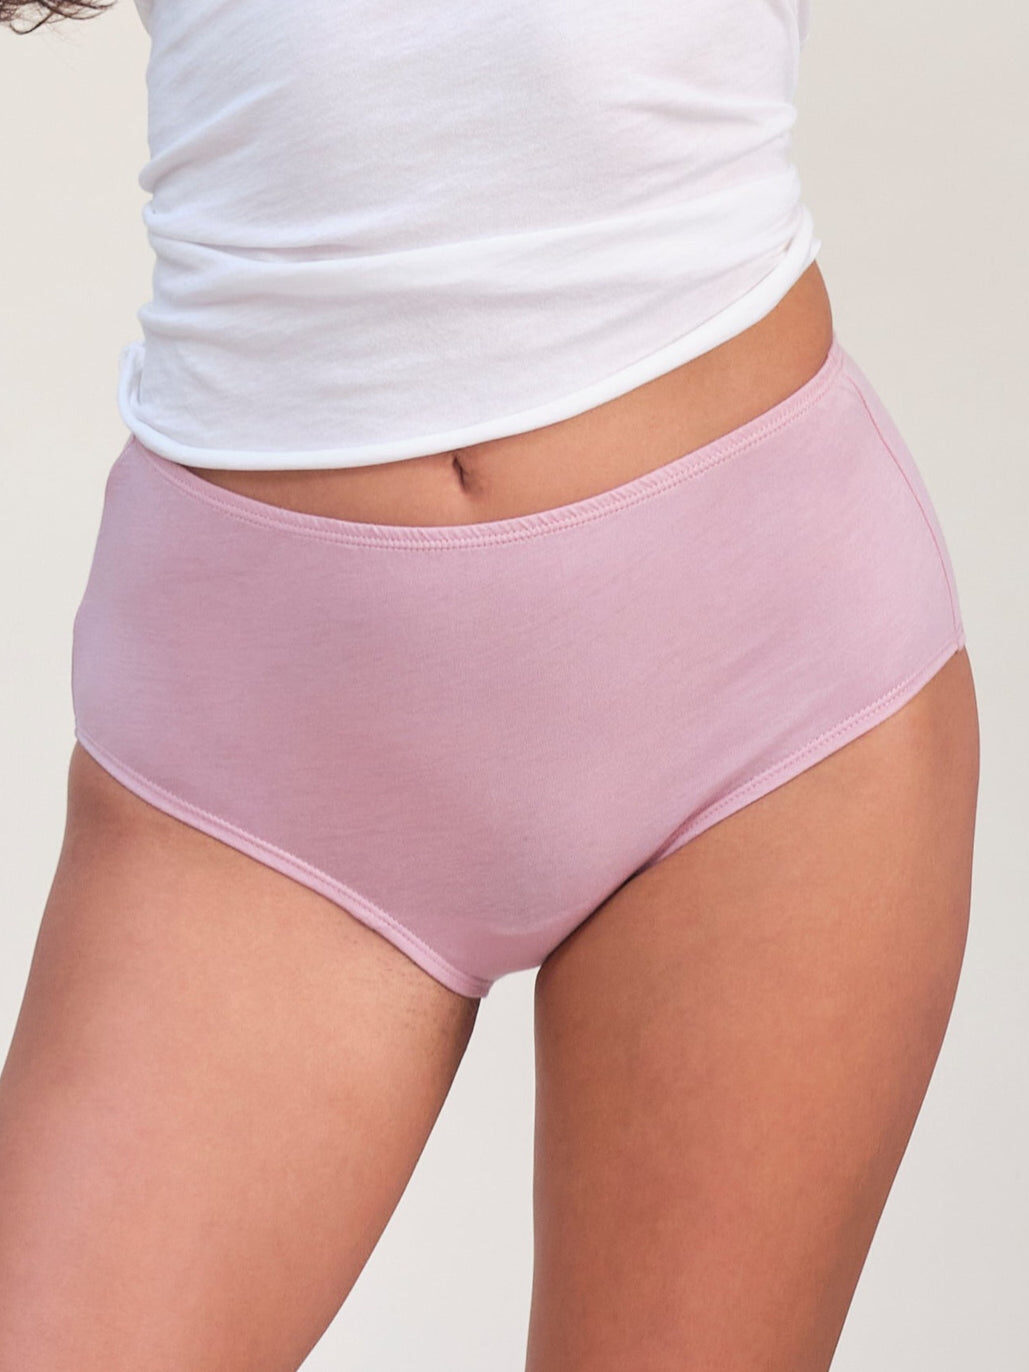 High Rise Thong - Pink, Women Hemp Panties, Made in Canada